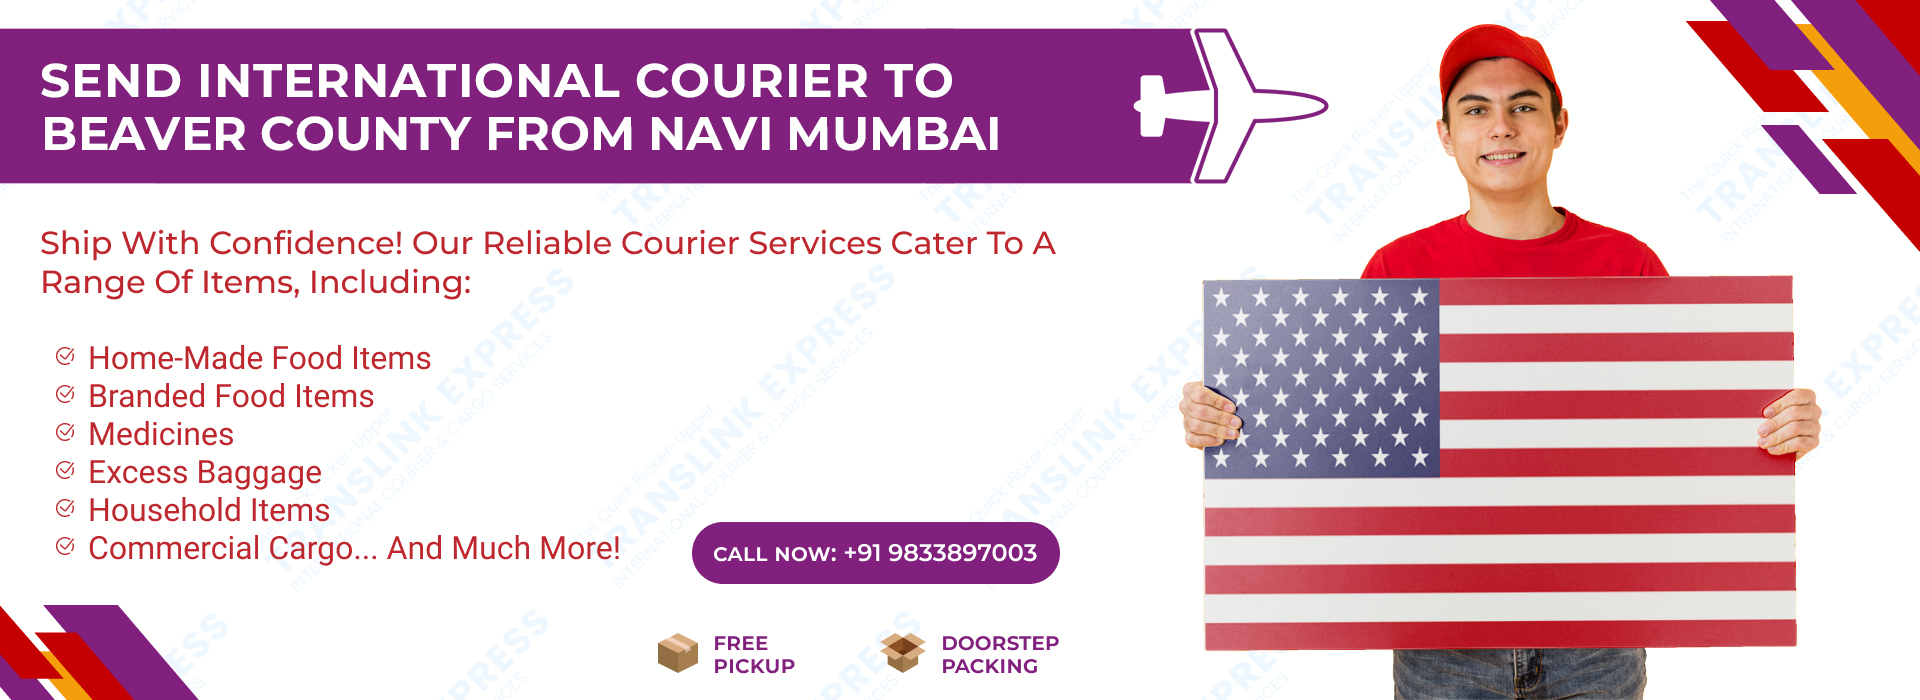 Courier to Beaver County From Navi Mumbai